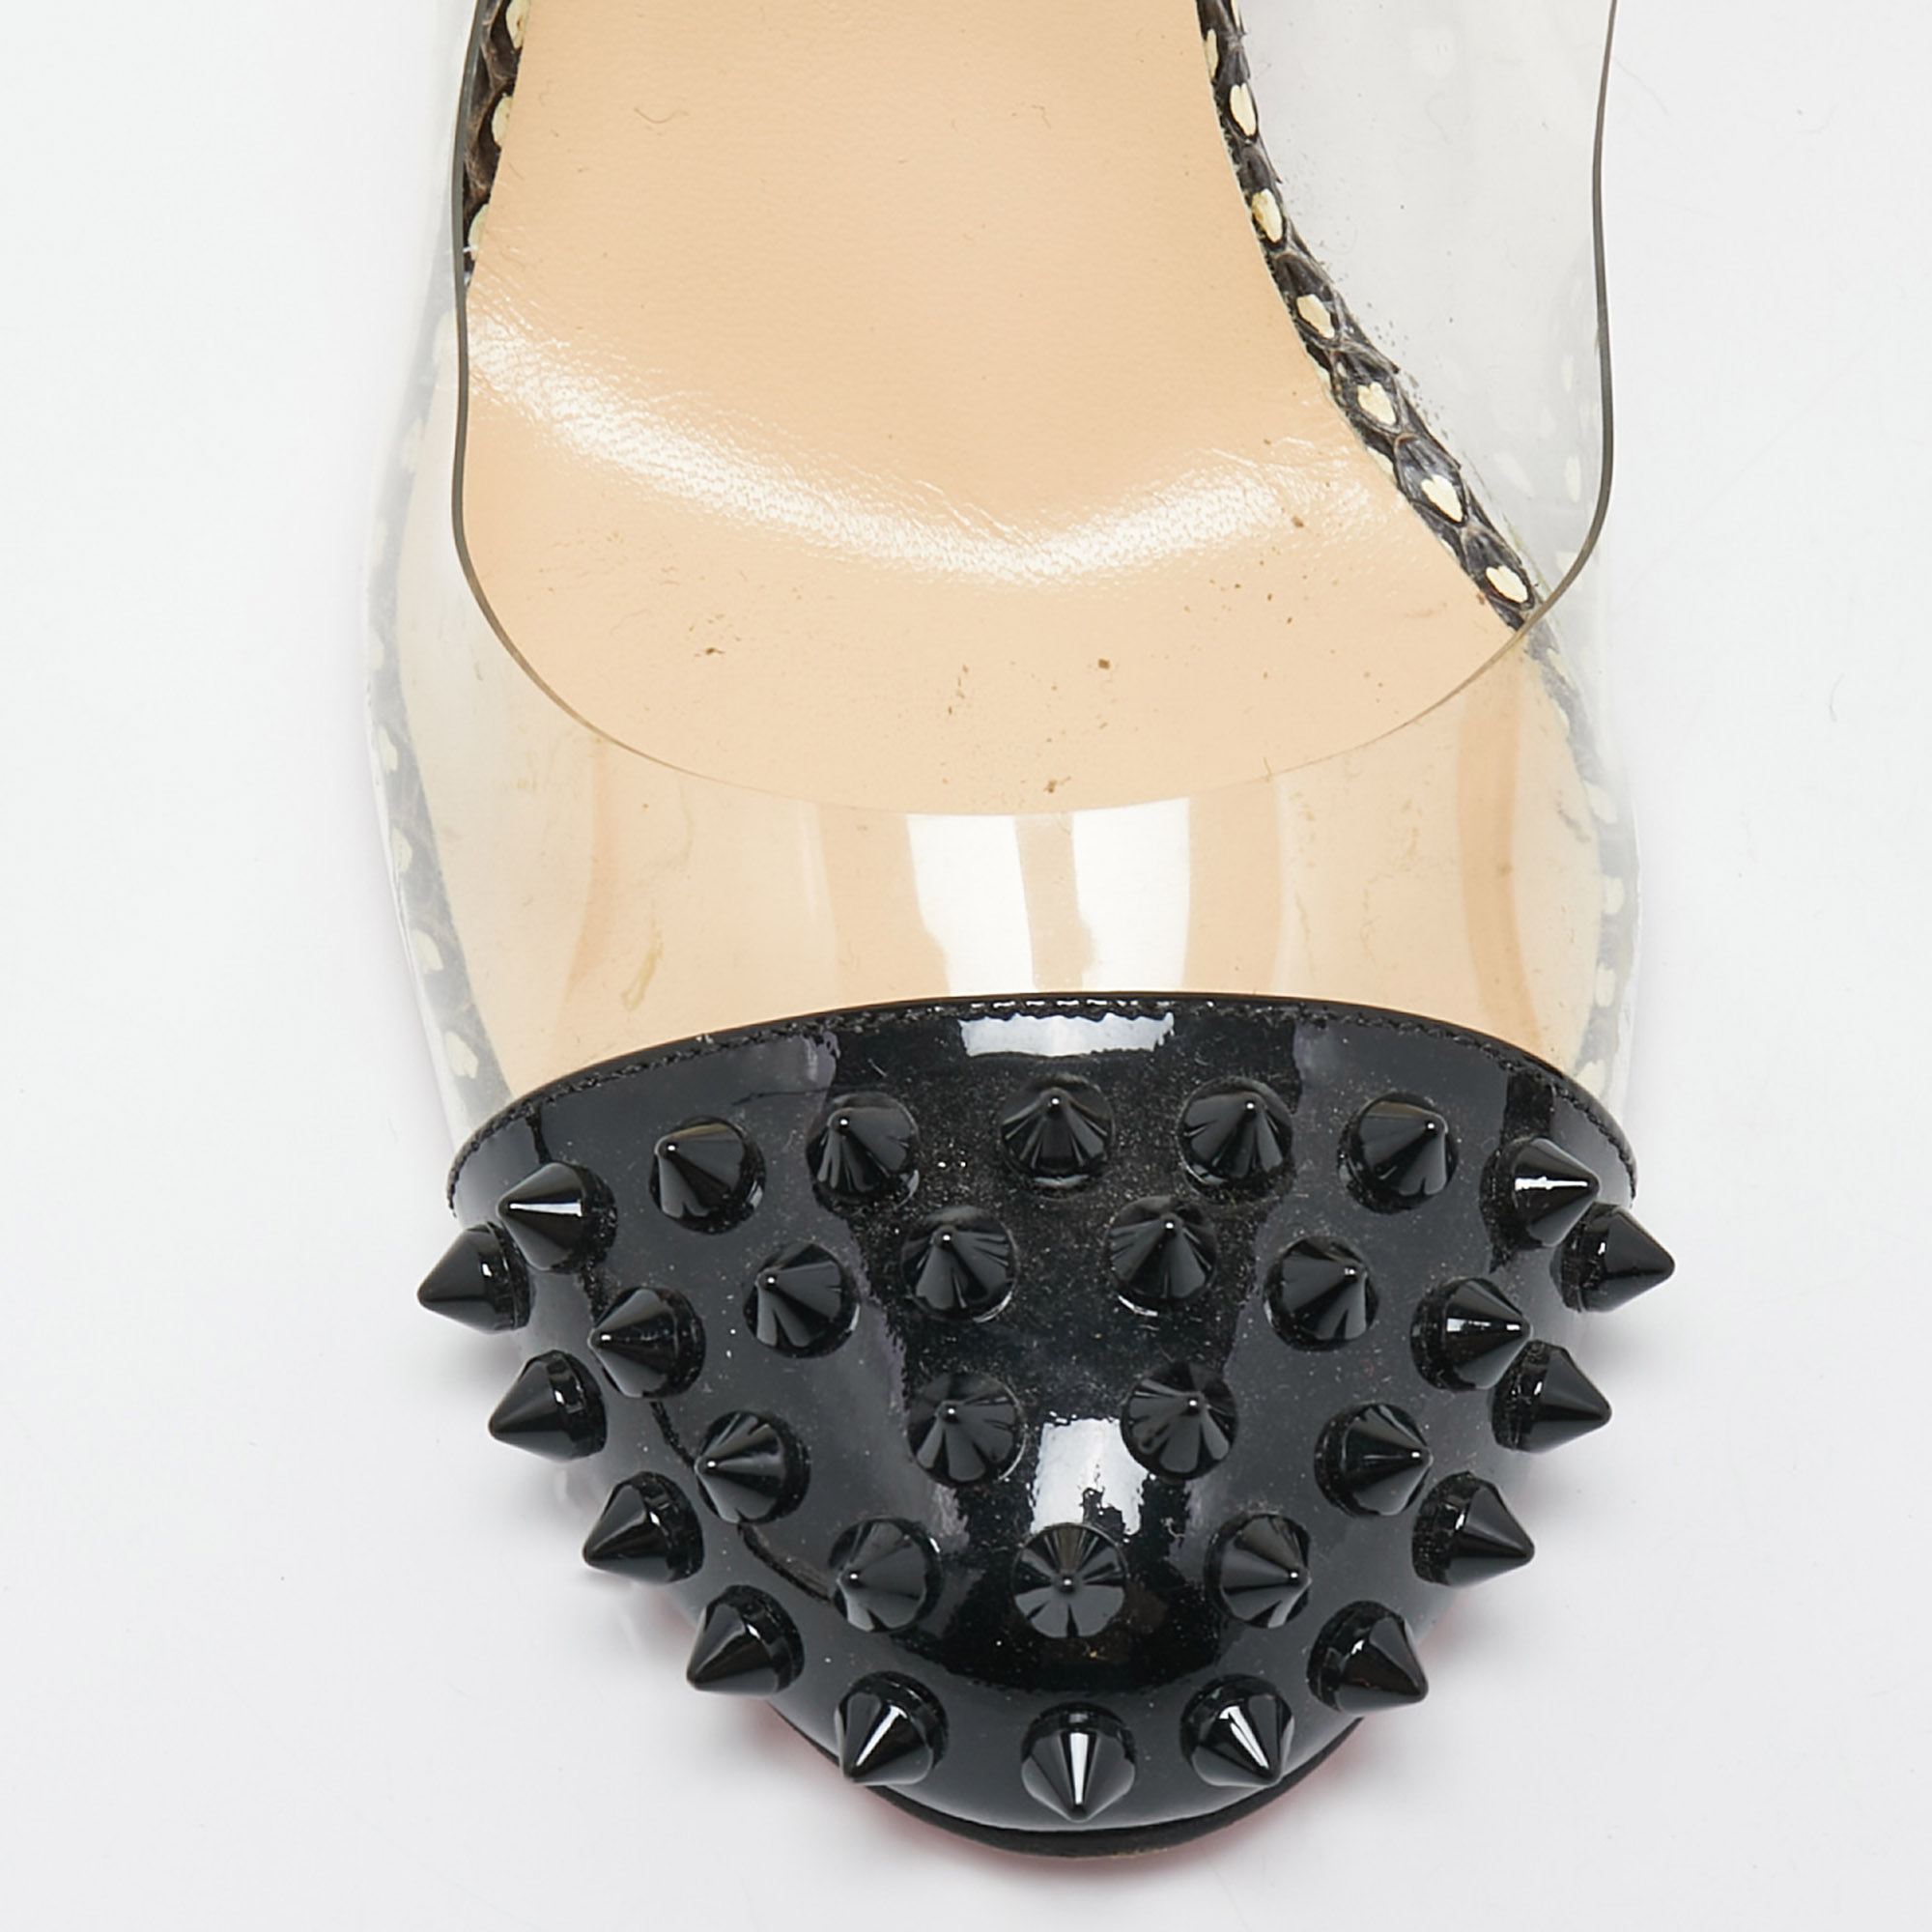 Christian Louboutin Tricolor PVC And Patent Epoca Slingback Pumps Size 38.5